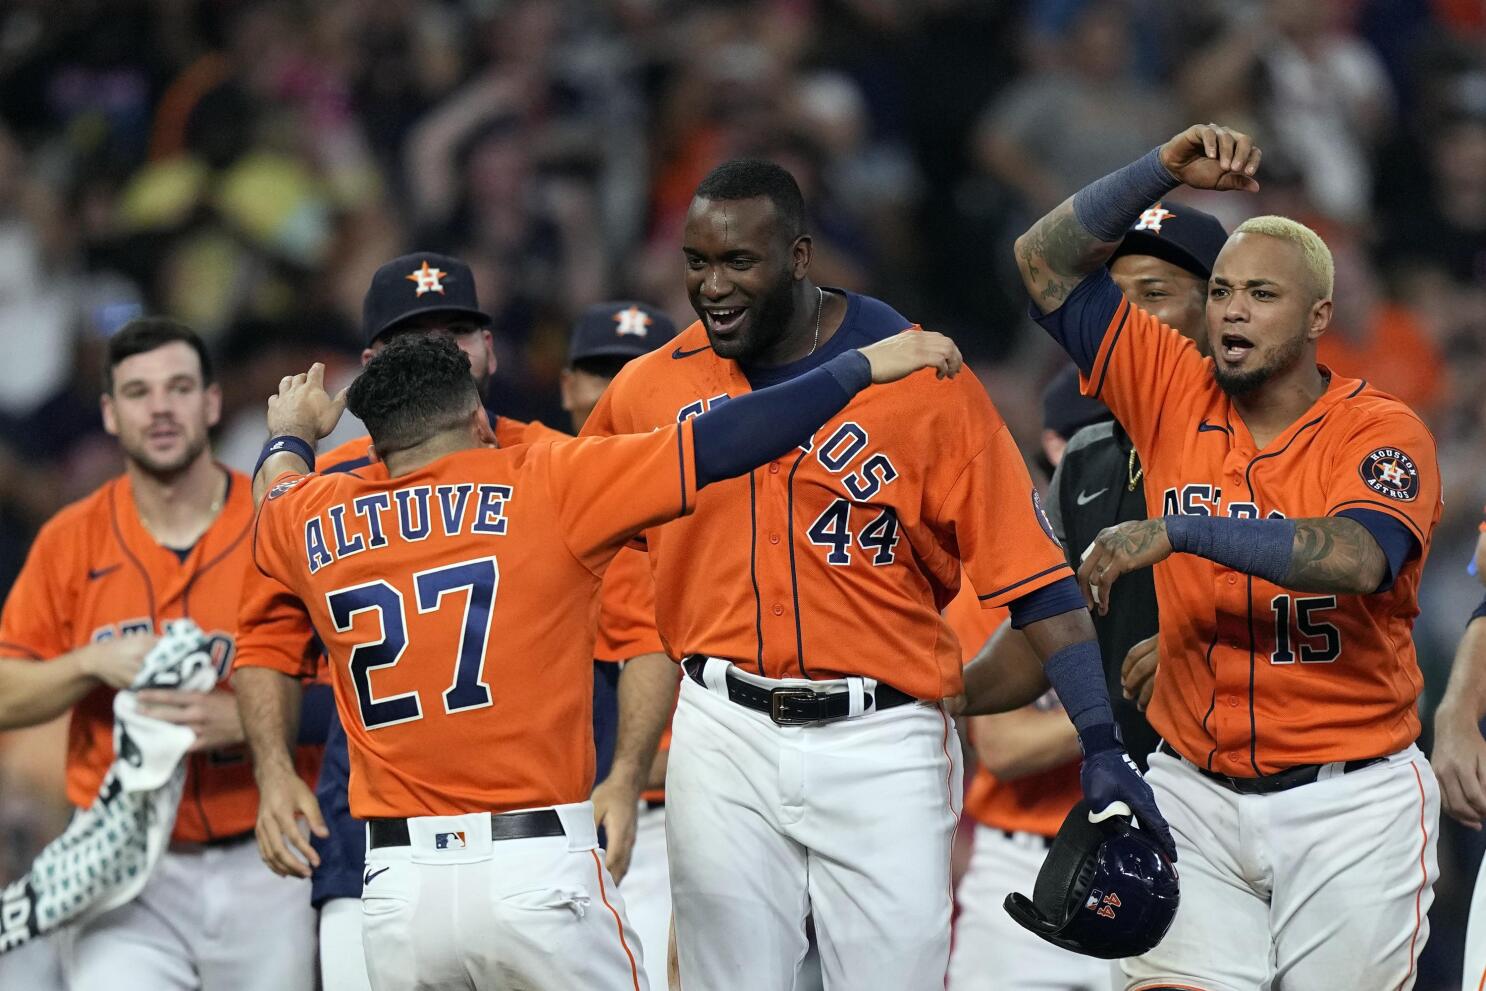 Houston Astros on X: Today's #Astros uniforms: home whites, orange caps  and unders.  / X